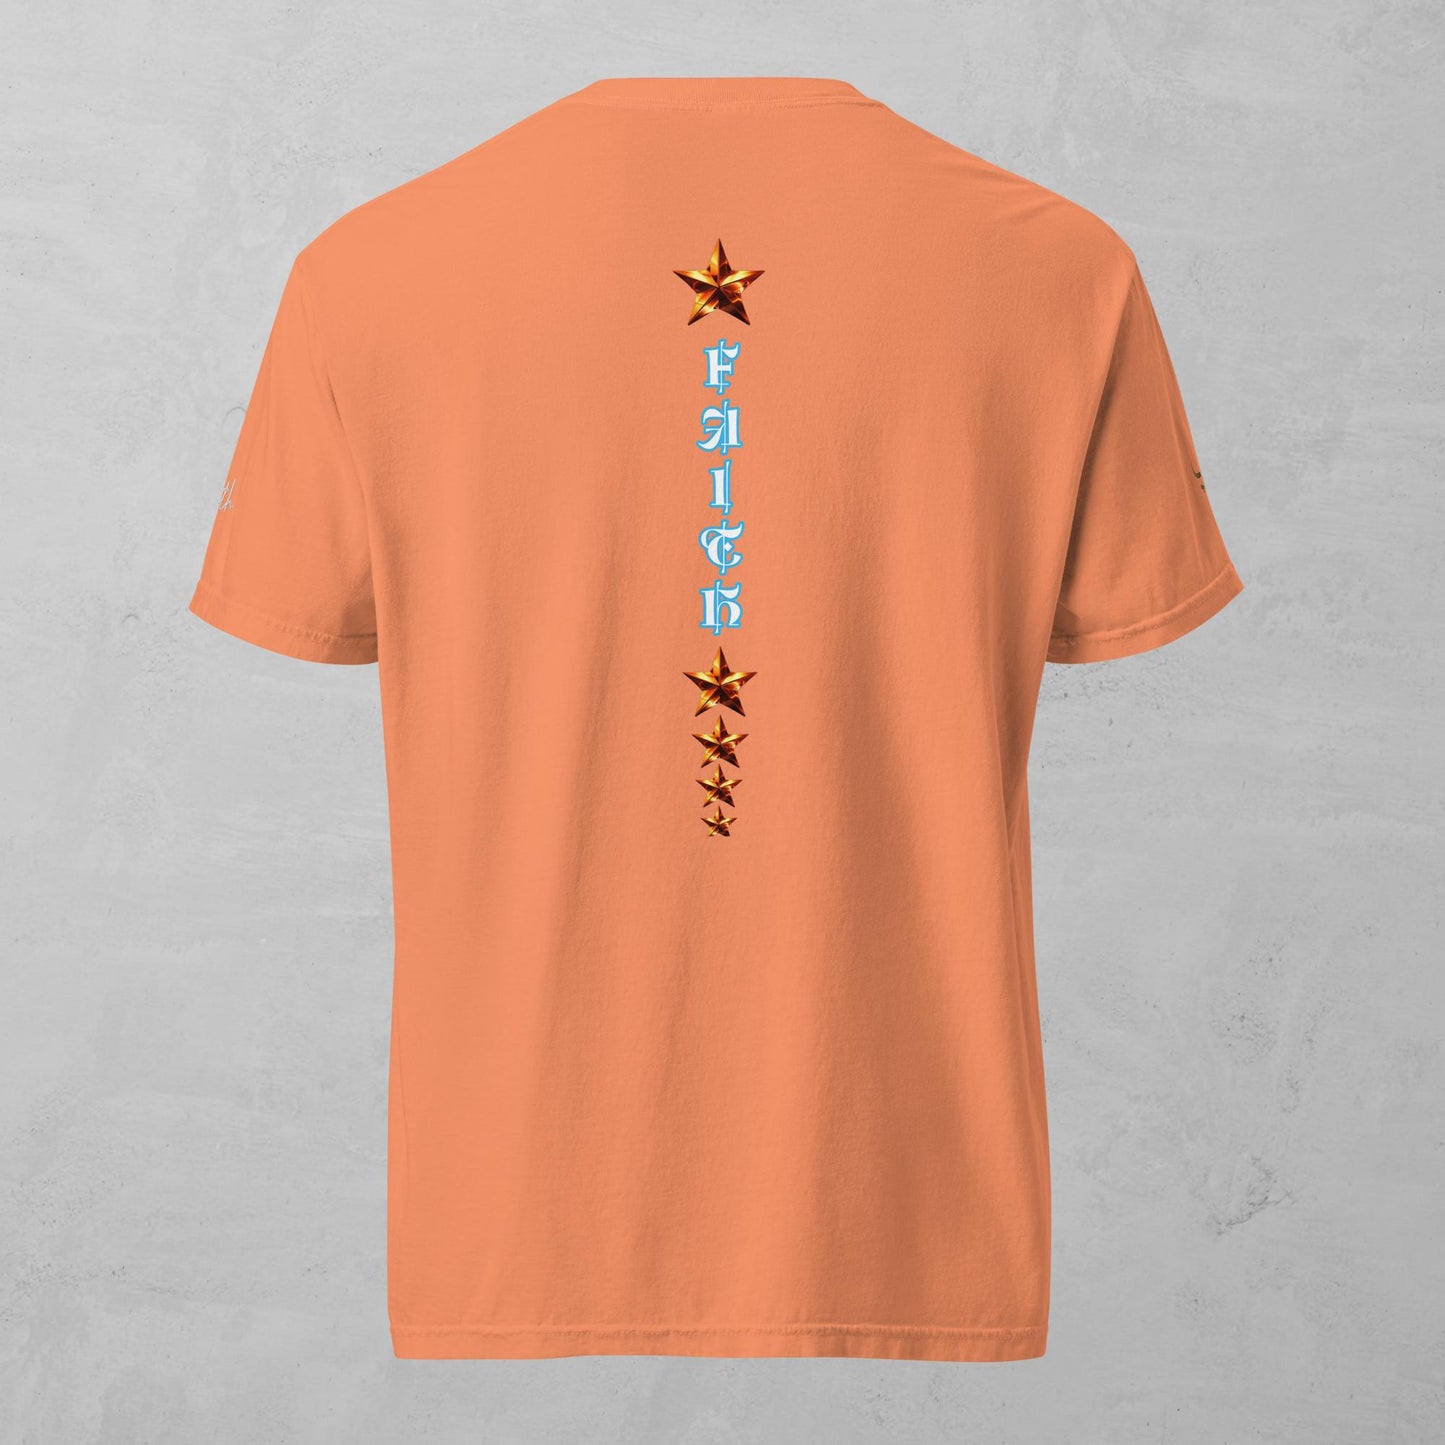 J.A Faith 5 Stars- Men's heavyweight t-shirt